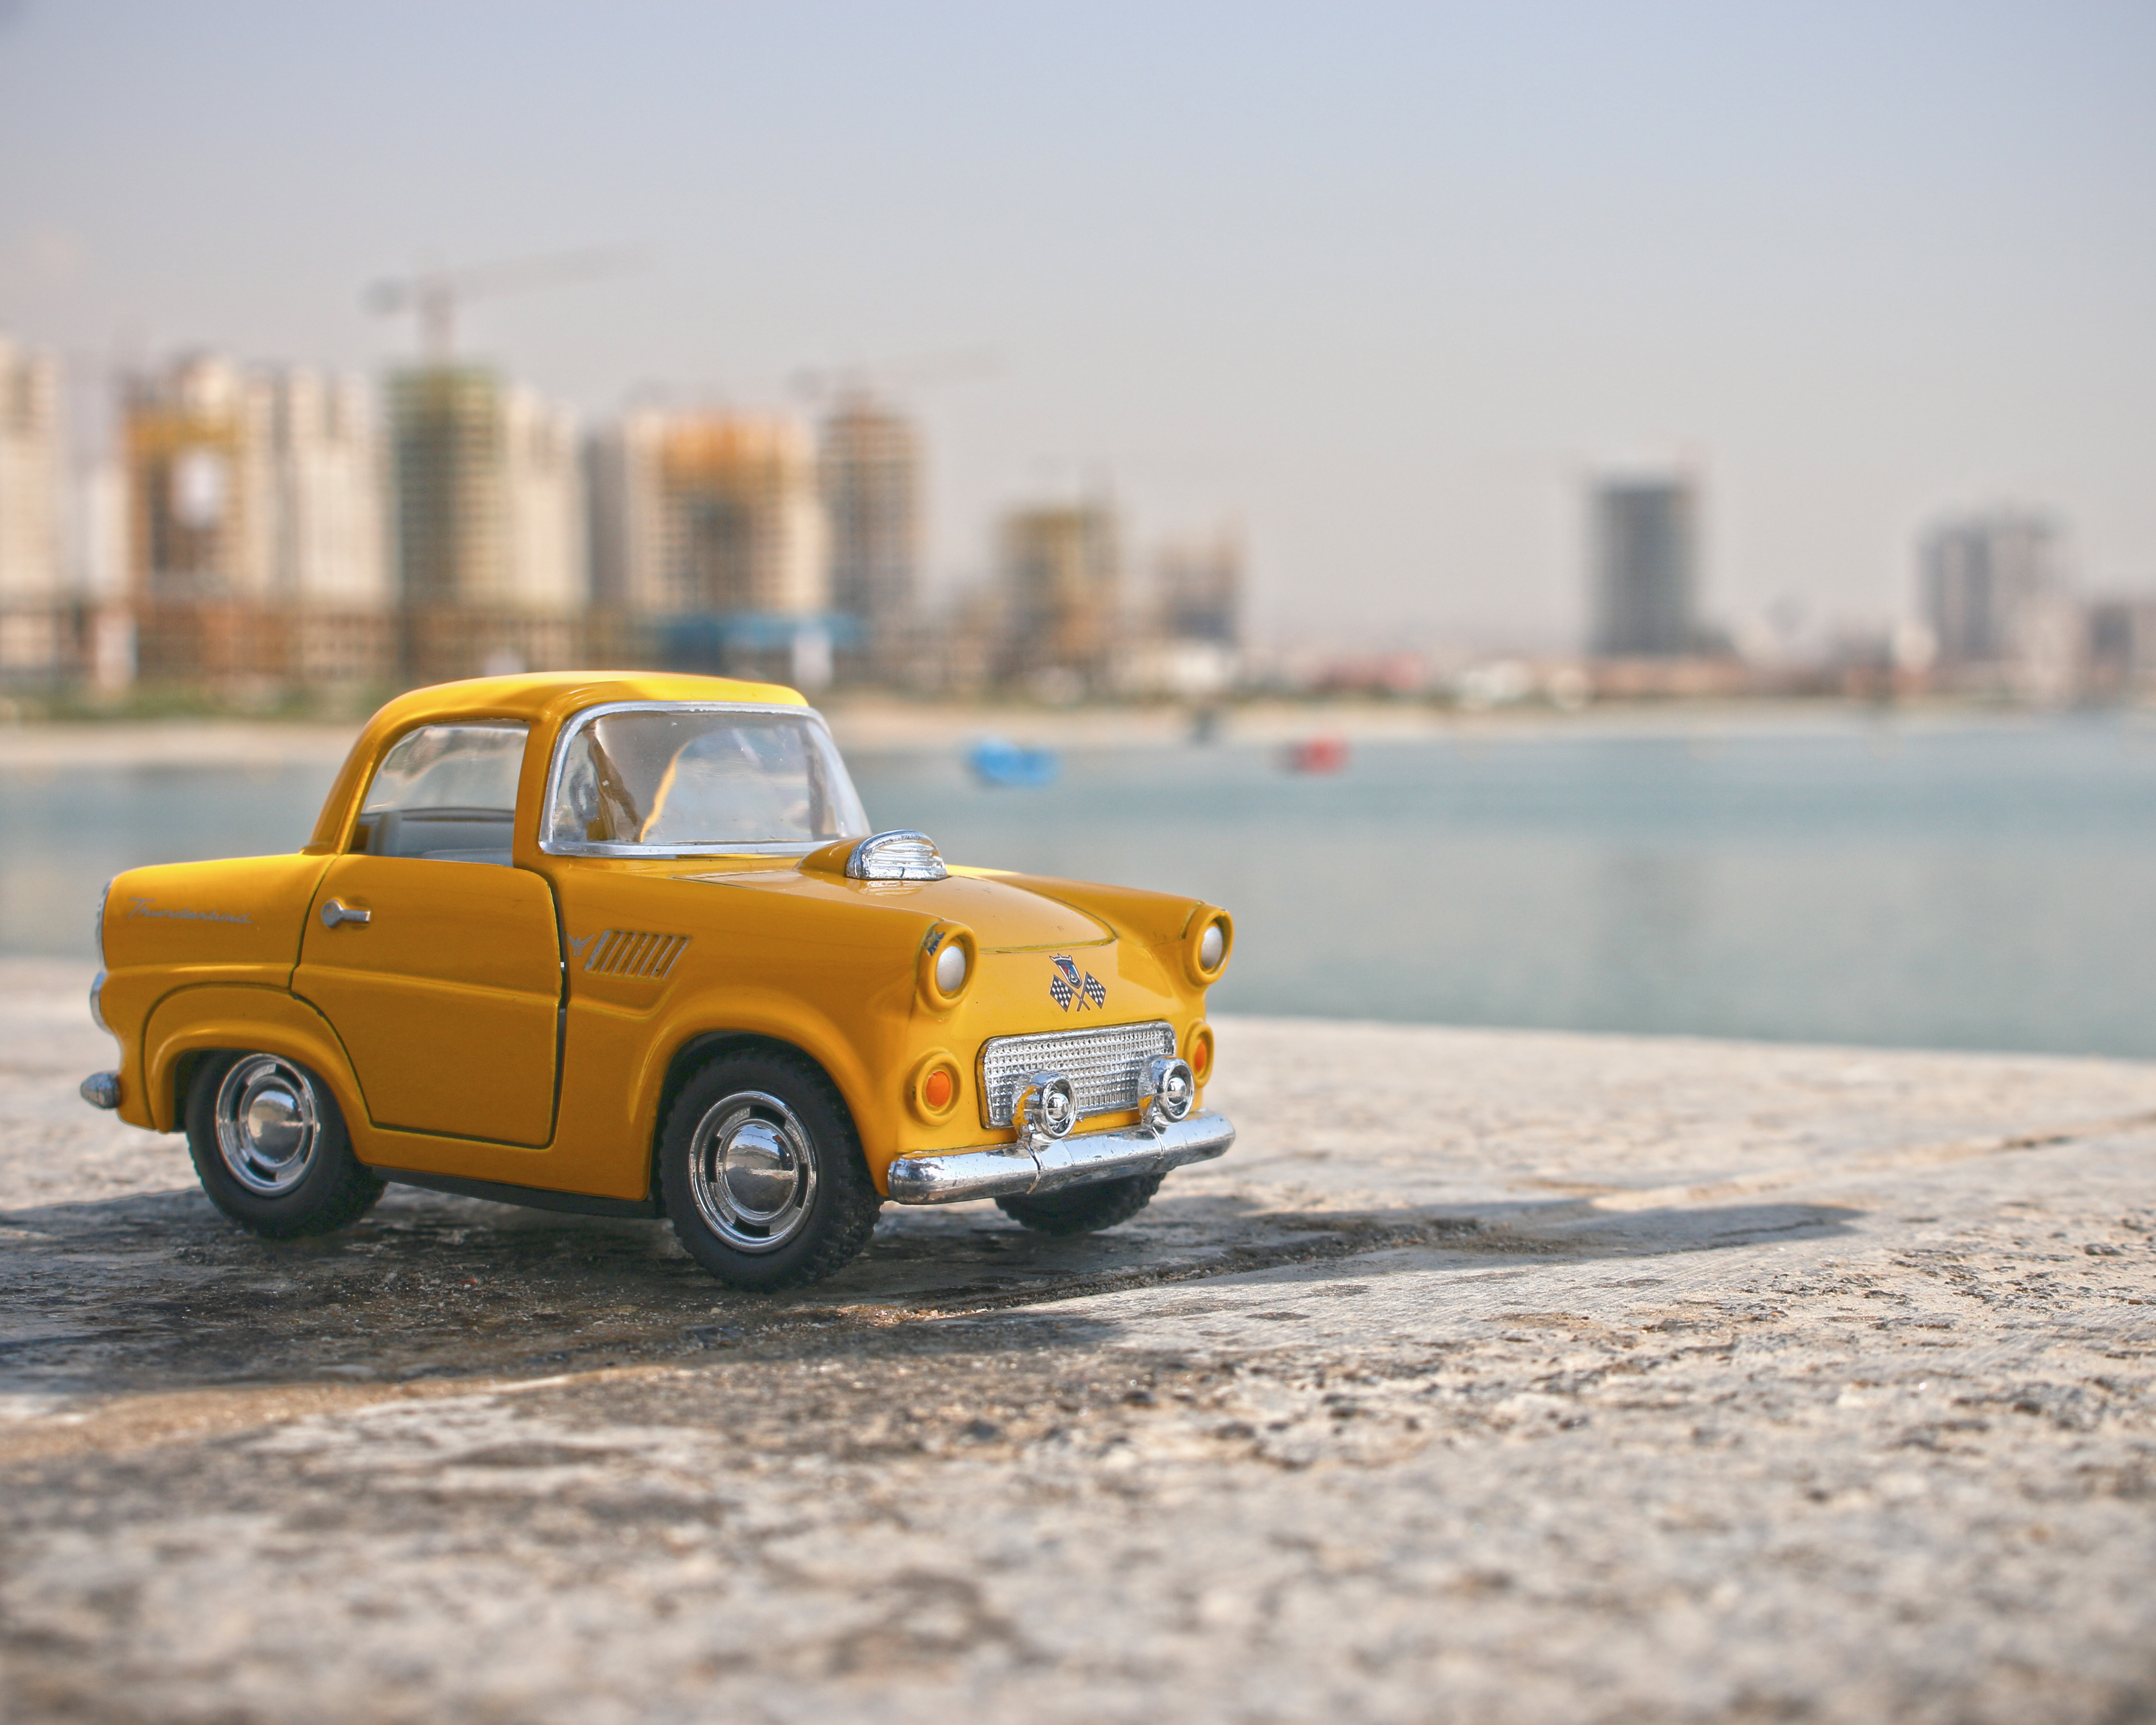 Free Images : macro, vintage car, miniature, buildings, toy car ...